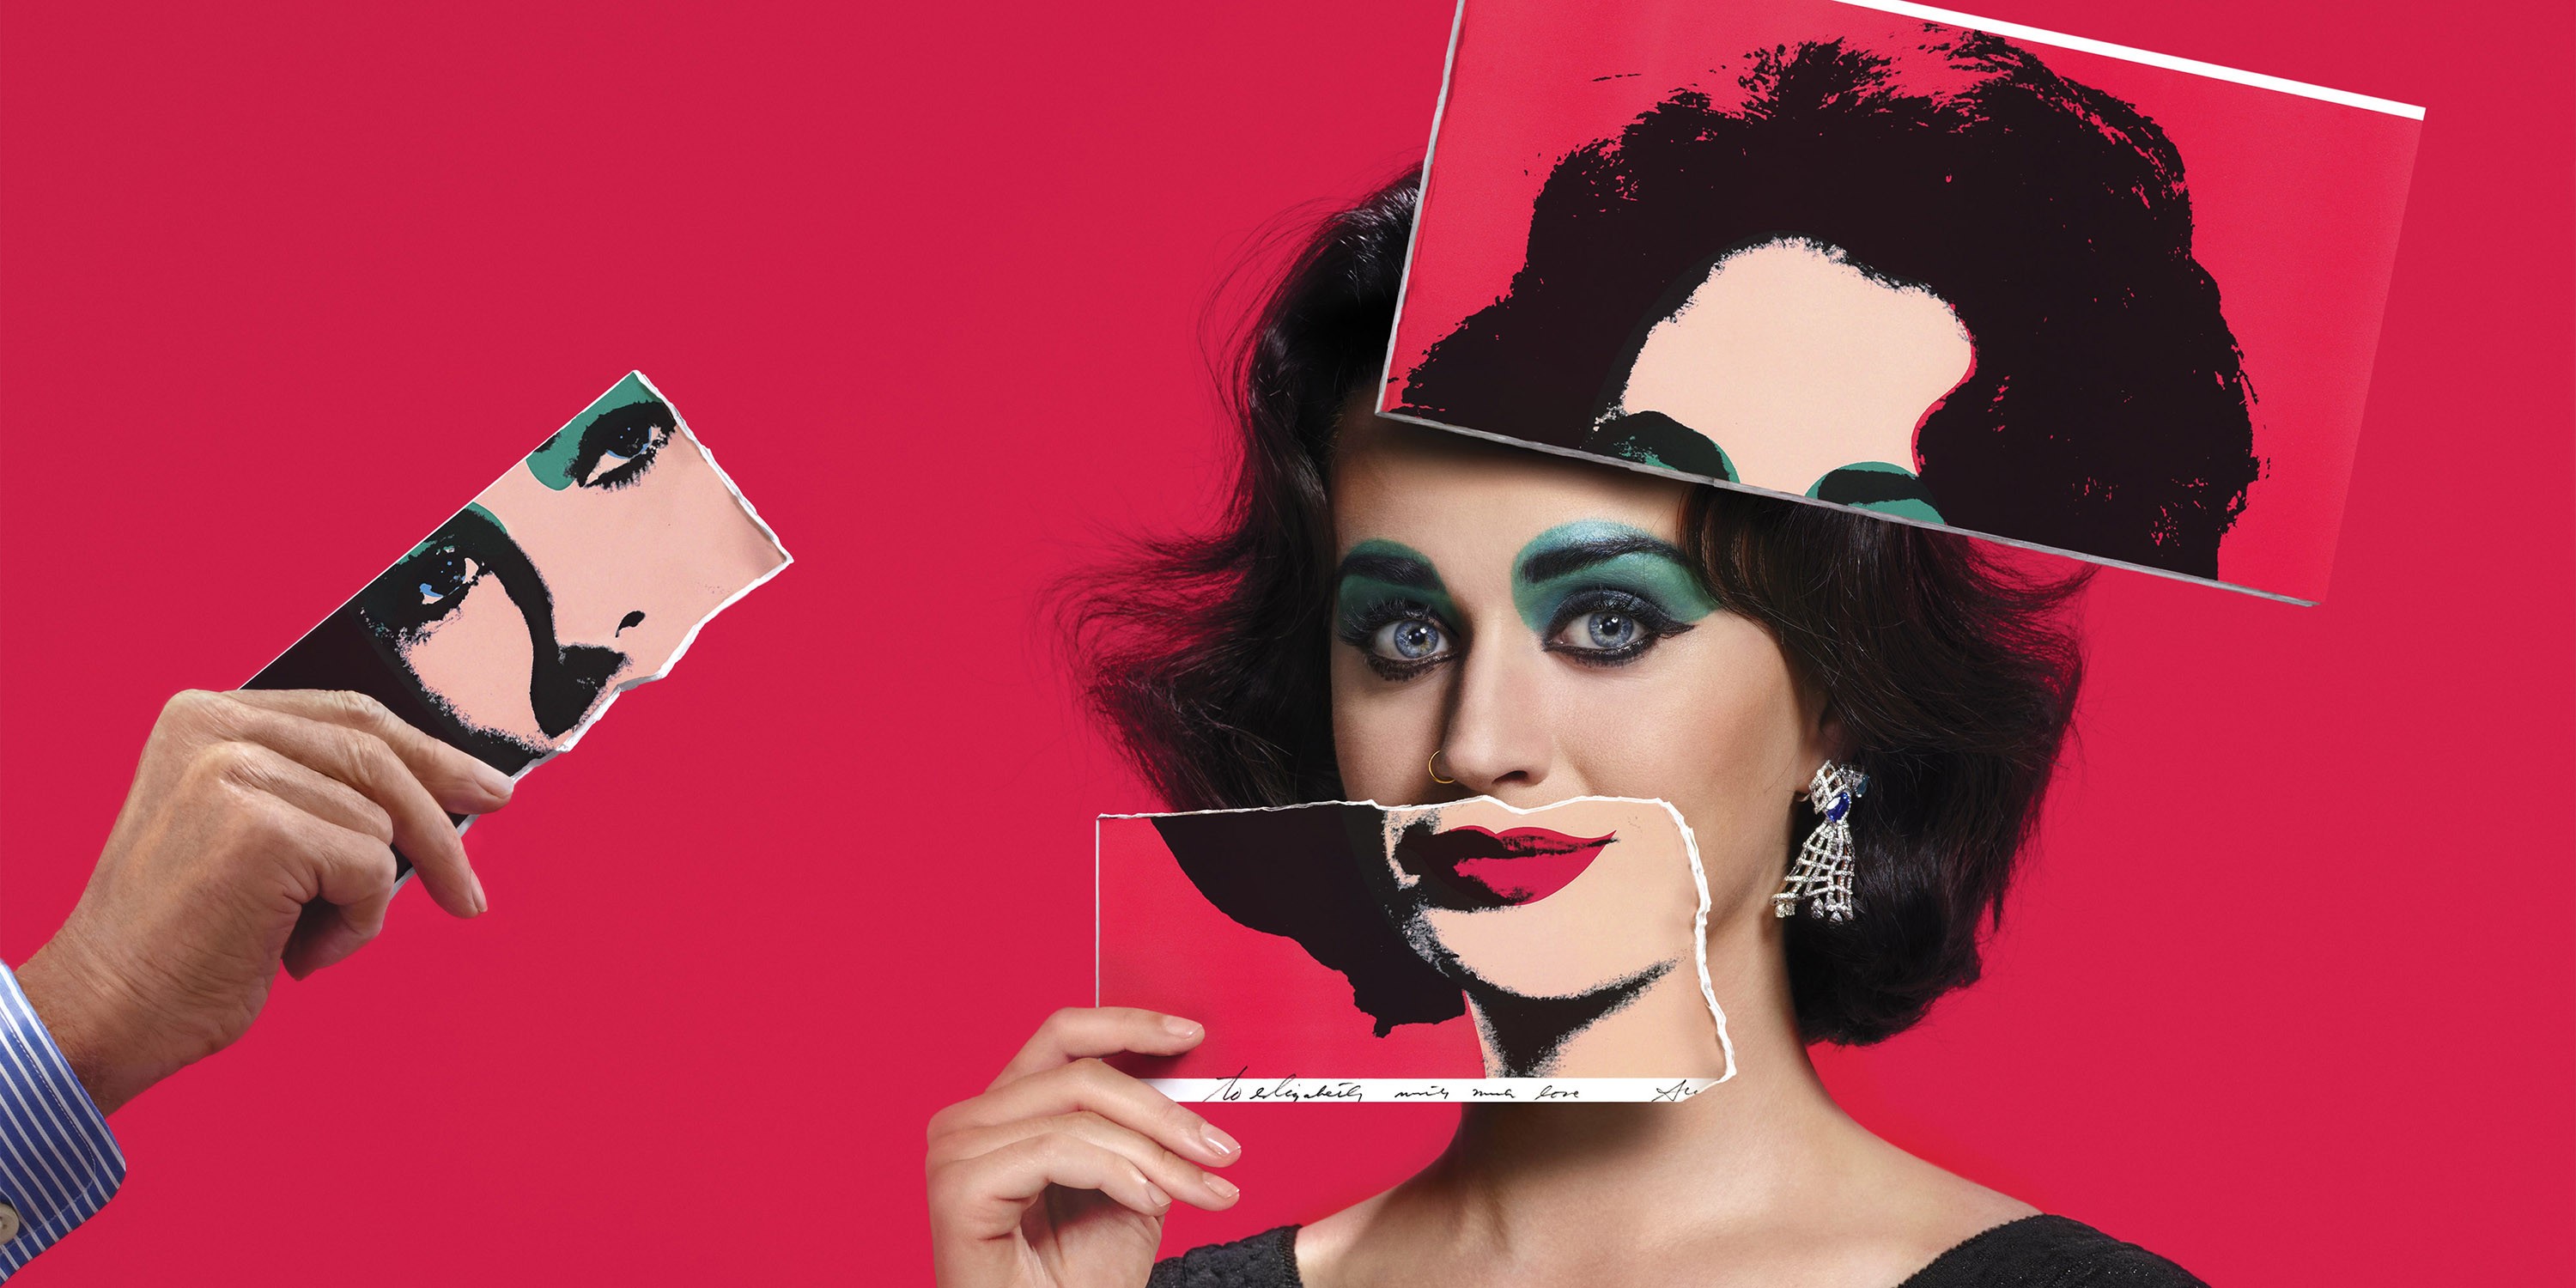 Katy Perry by Jean-Paul Goude for Harper's Bazaar (September 2015)